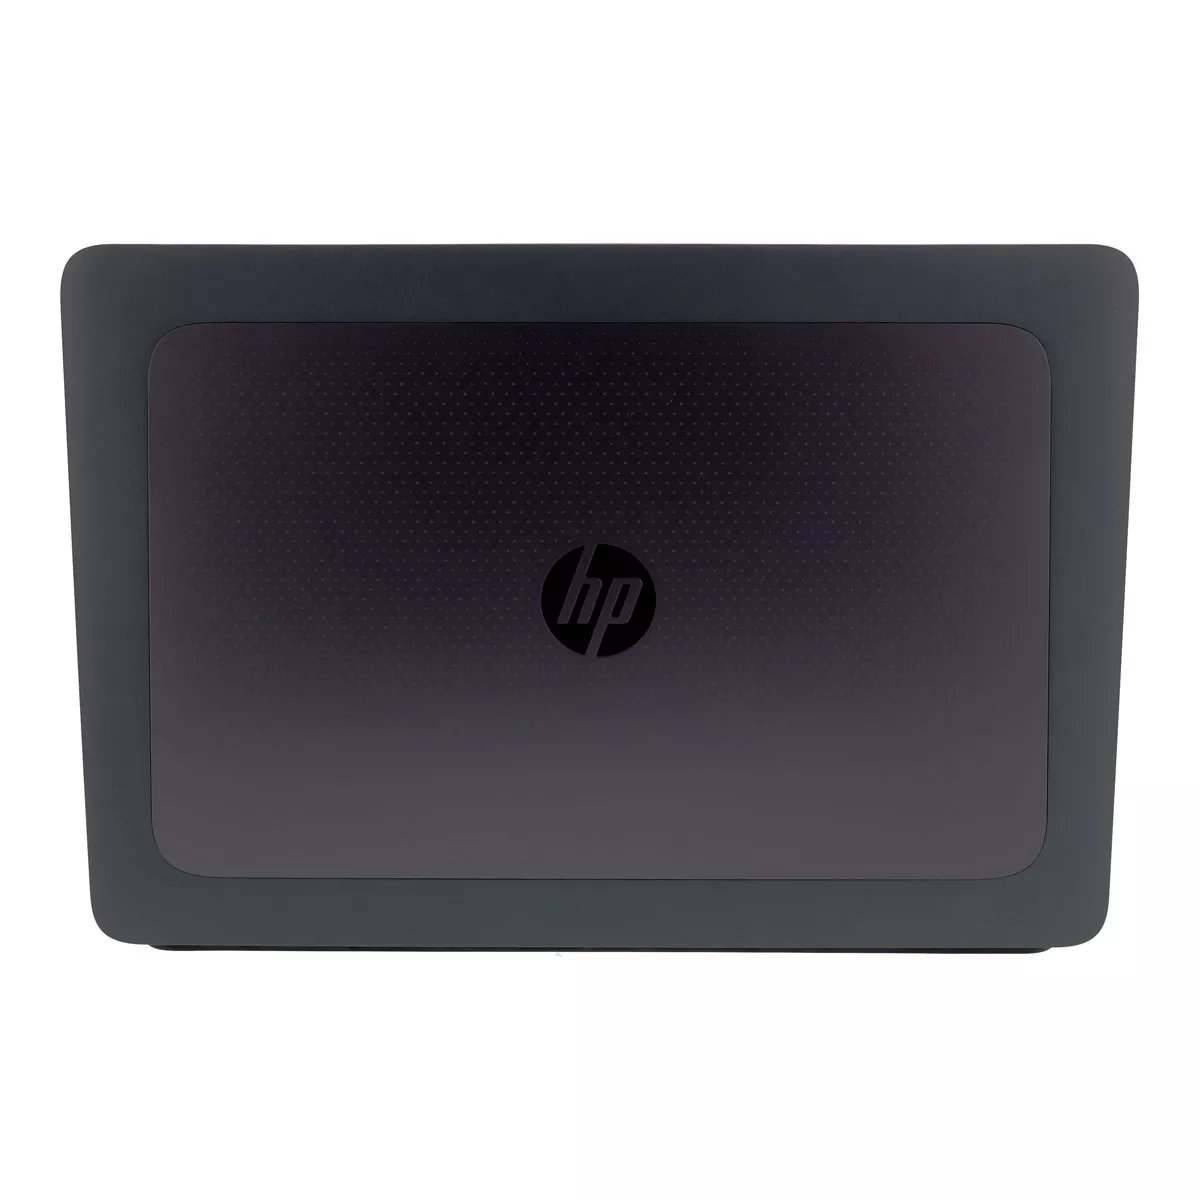 HP ZBook 15 G3 Core i7 6700HQ nVidia Quadro M2000M 16 GB 240 GB M.2 SSD Webcam B